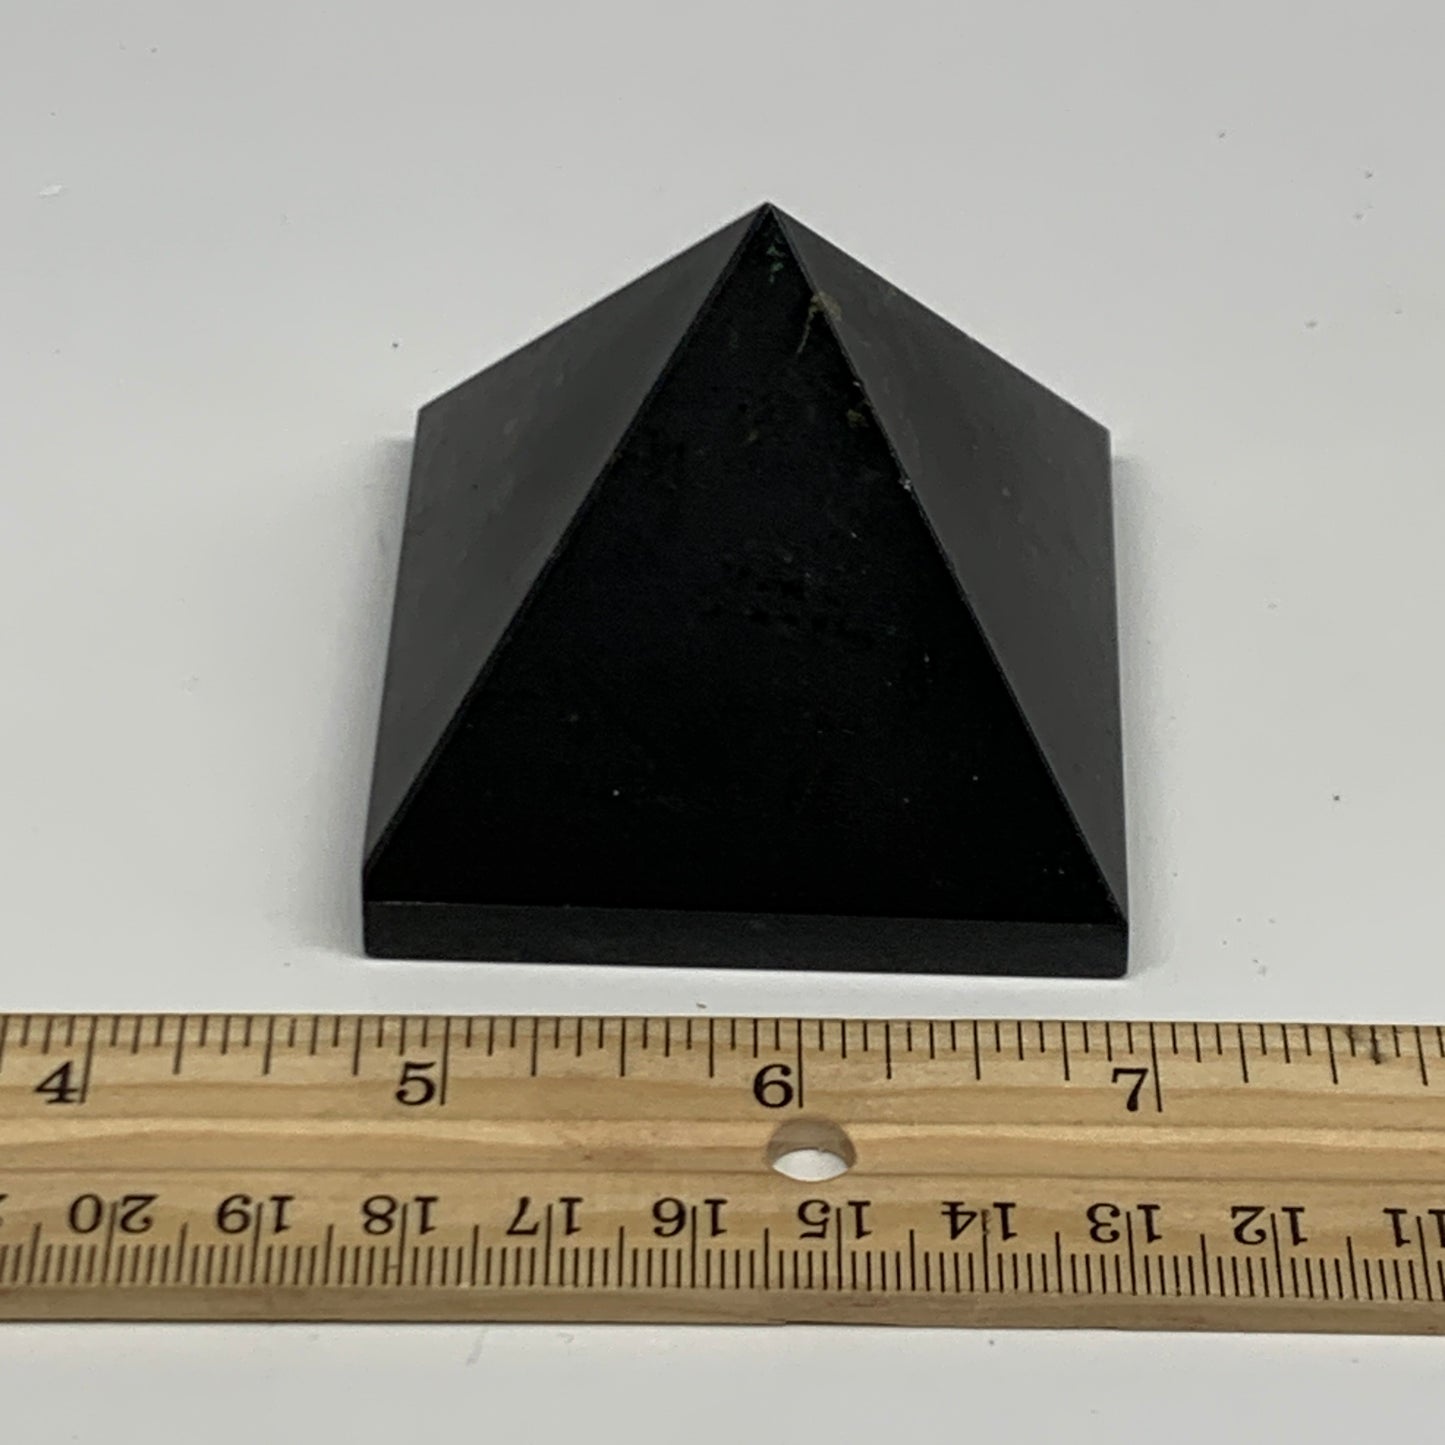 190.9g, 1.9"x2.3"x2.2", Black Tourmaline Pyramid Gemstone,Healing Crystal, B2977